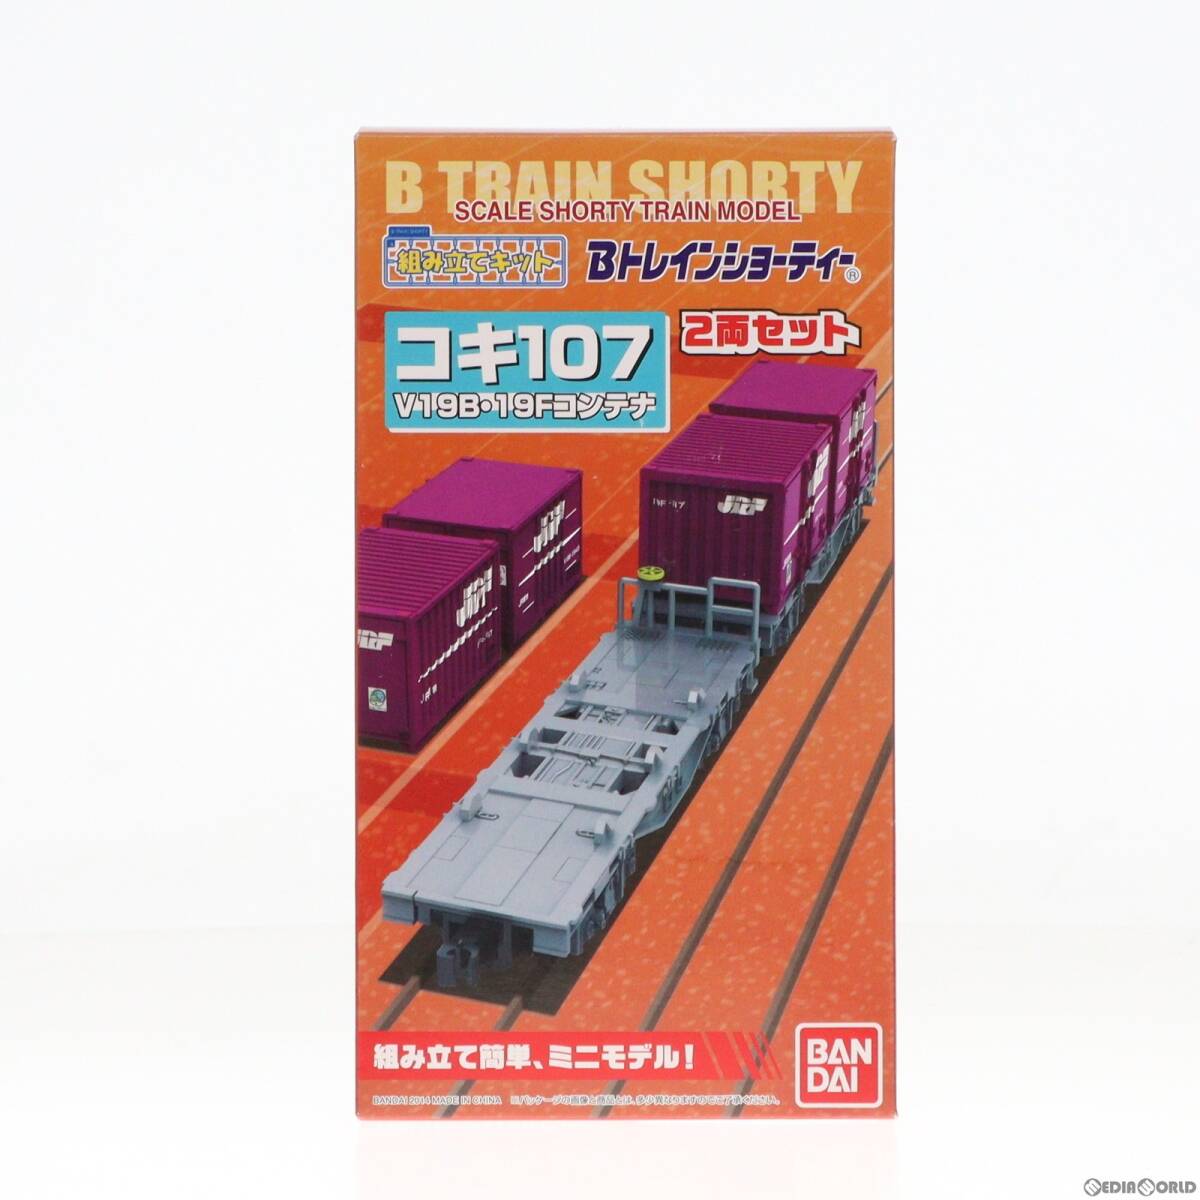 [ used ][RWM]820228 B Train Shorty -koki107 V19B*19F container 2 both set assembly kit N gauge railroad model Bandai (62005202)